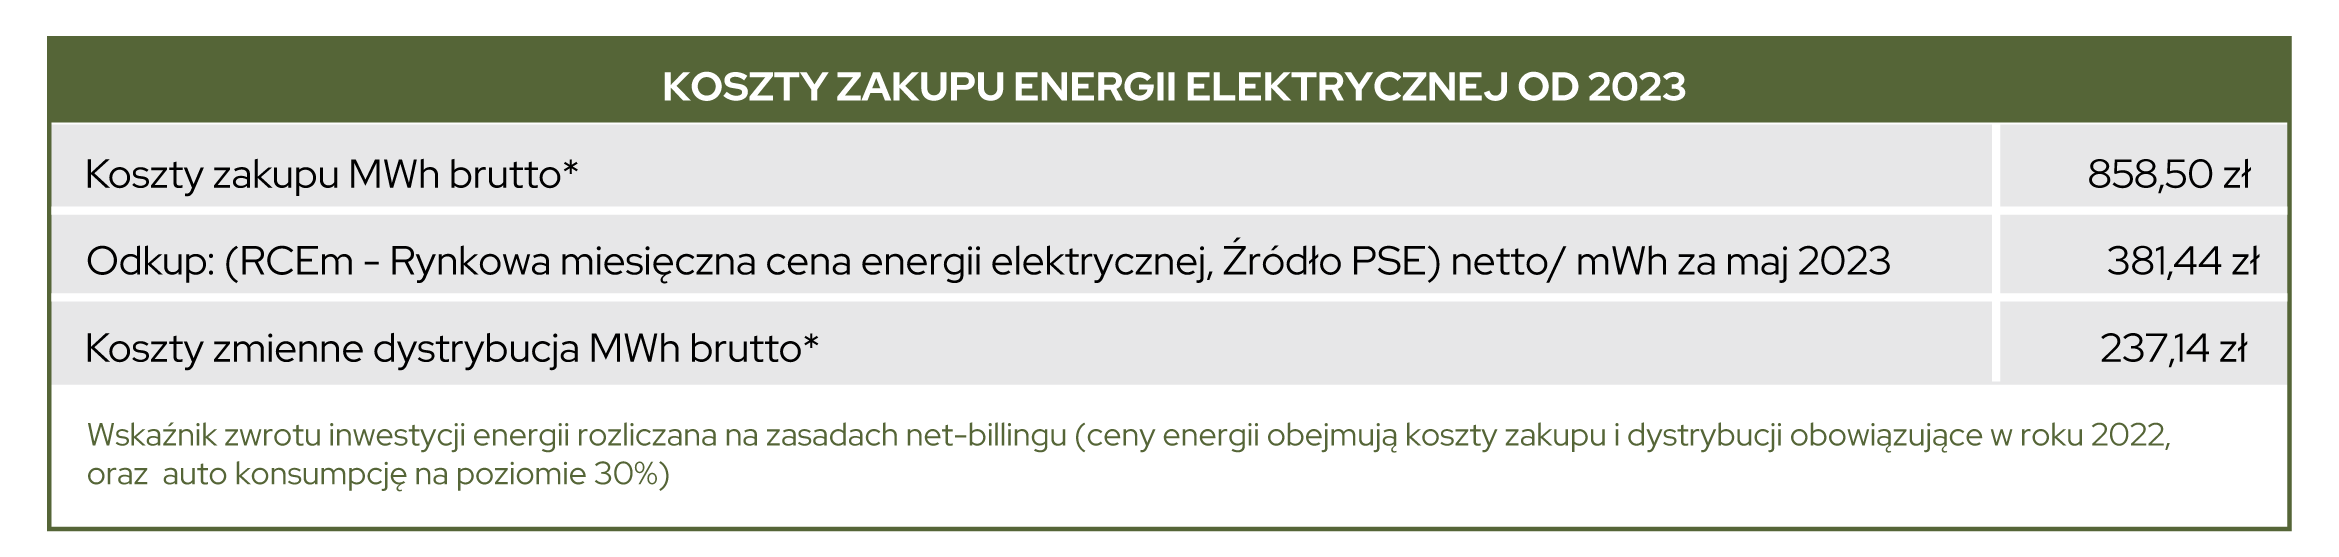 dvge_pvpi-indywidual-koszt-zakupu-energii